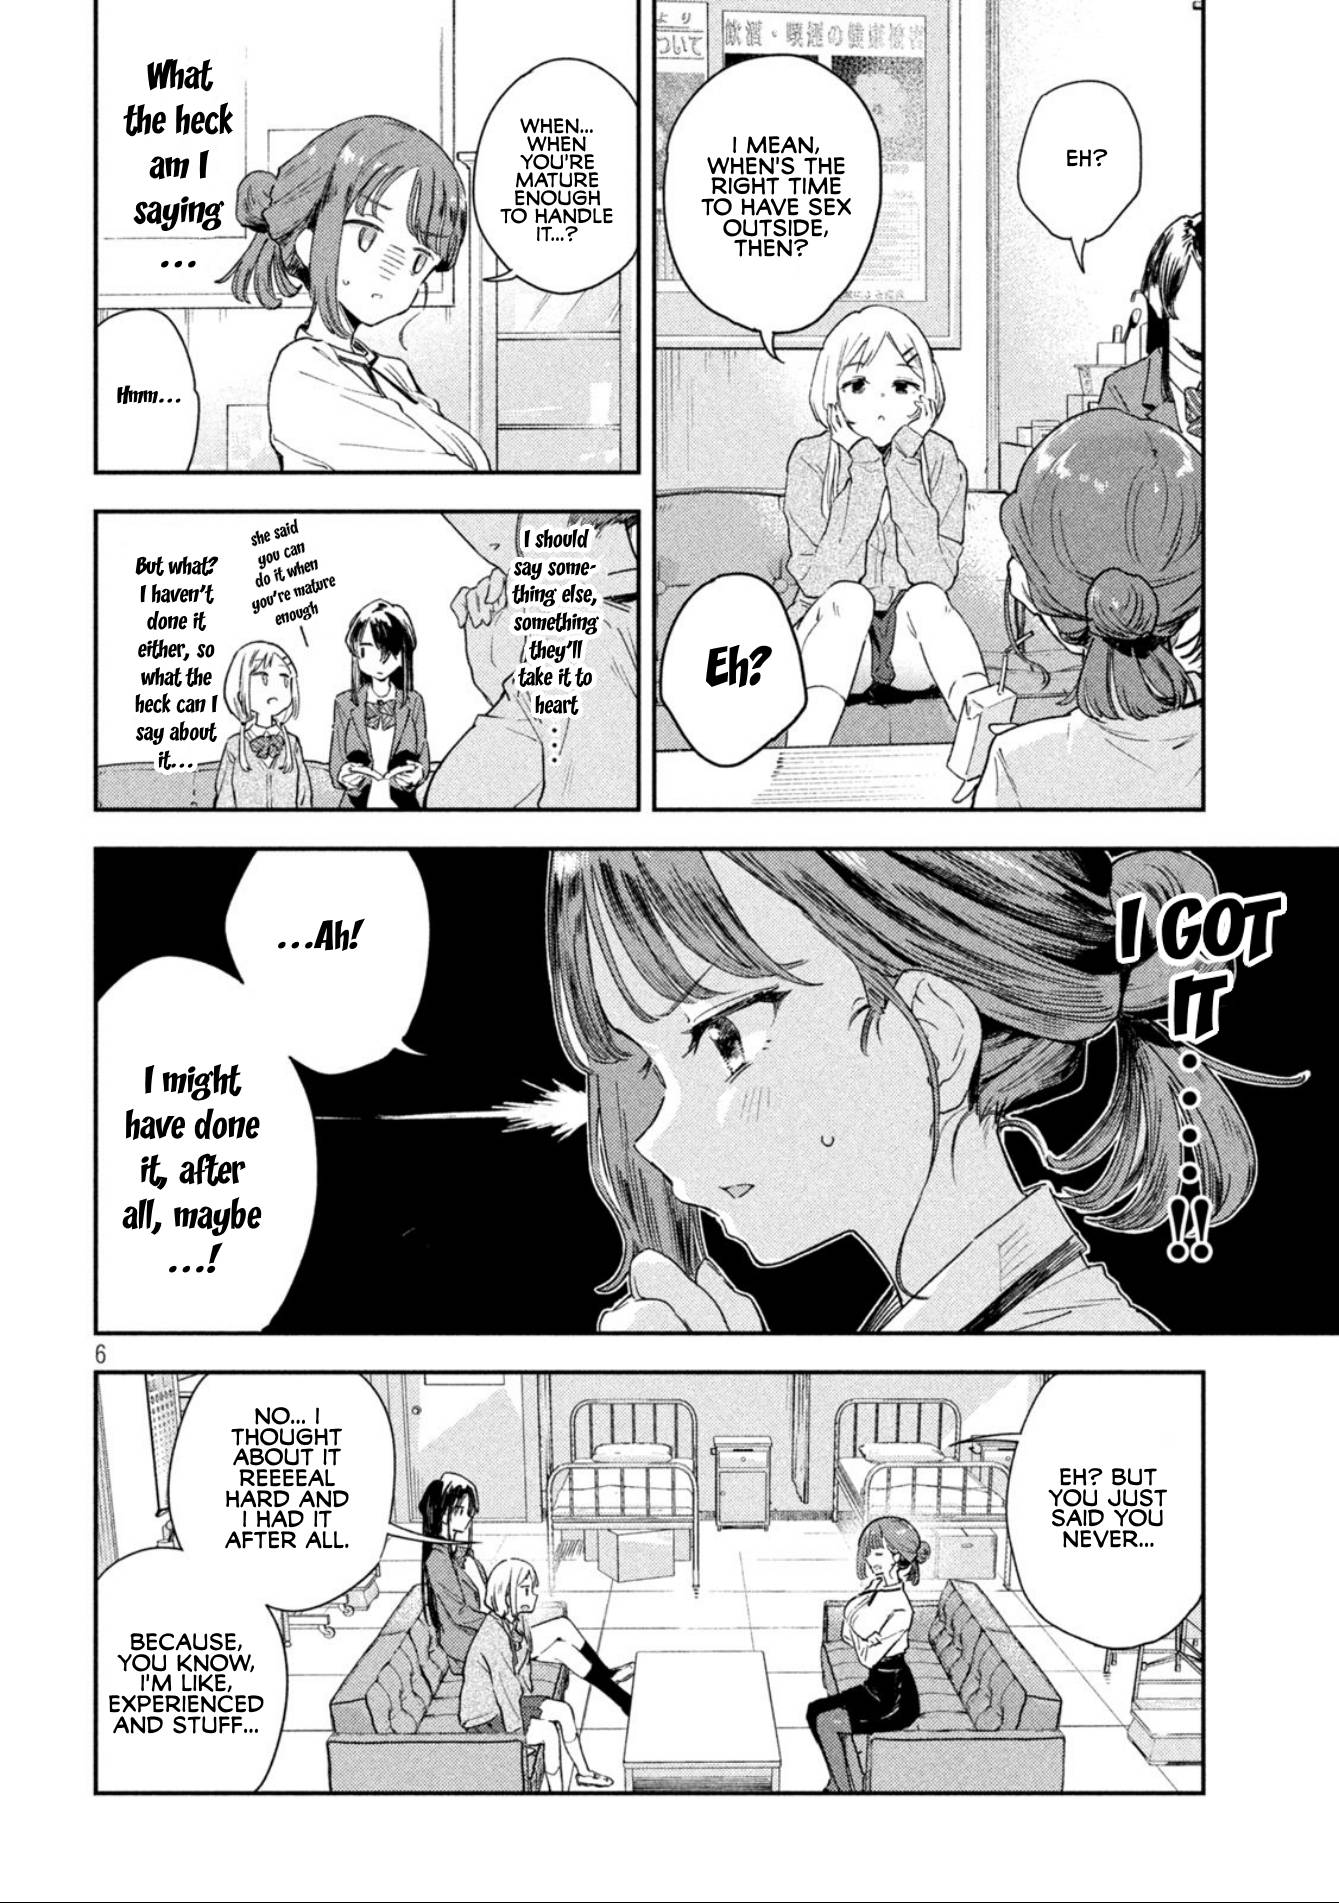 Miyo-Chan Sensei Said So - chapter 1 - #5